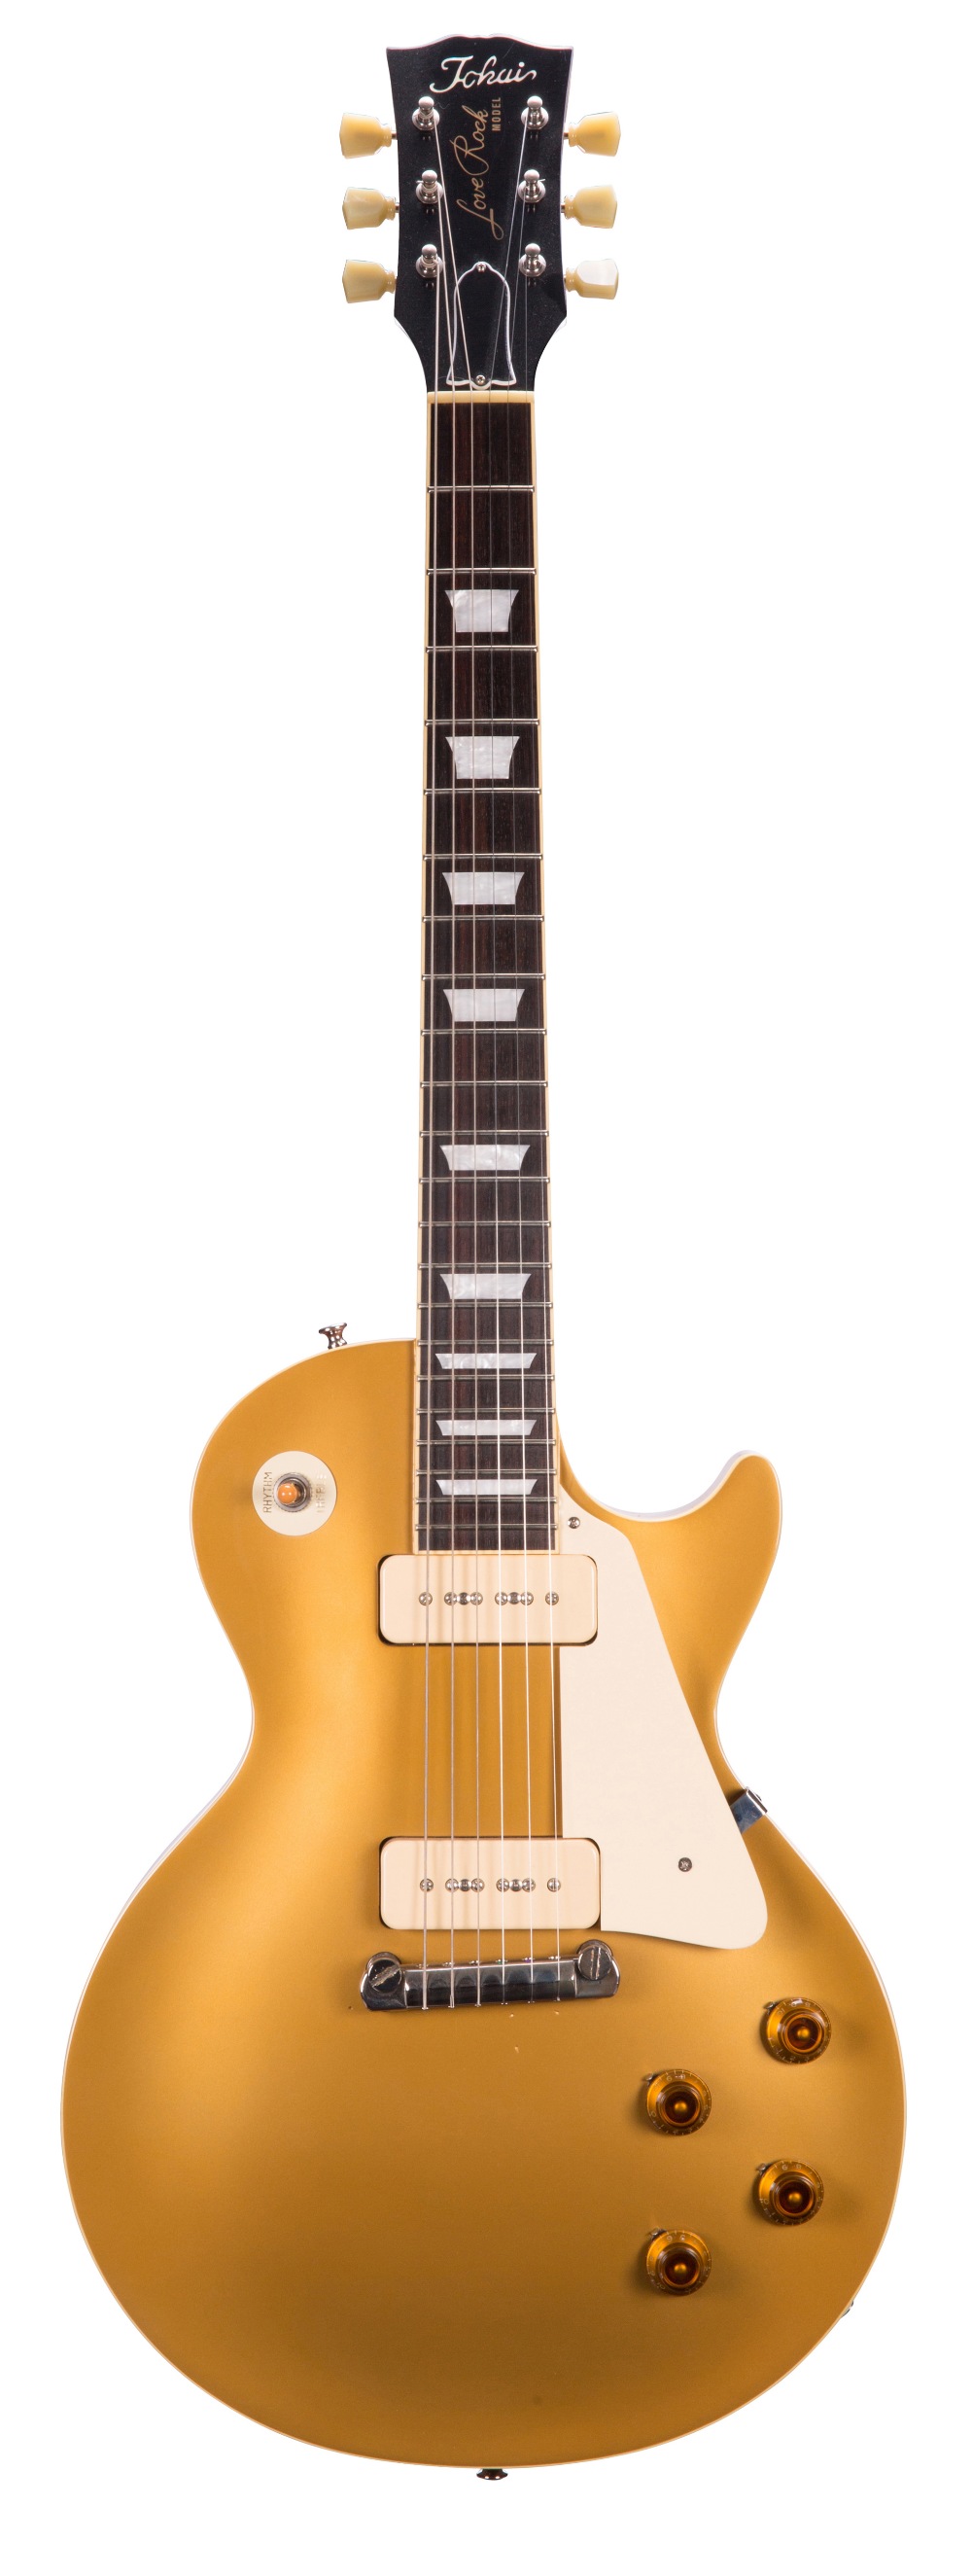 2012 Tokai Love Rock P90 Goldtop electric guitar, made in Japan, ser. no. 12xxxx0; Finish: gold top,